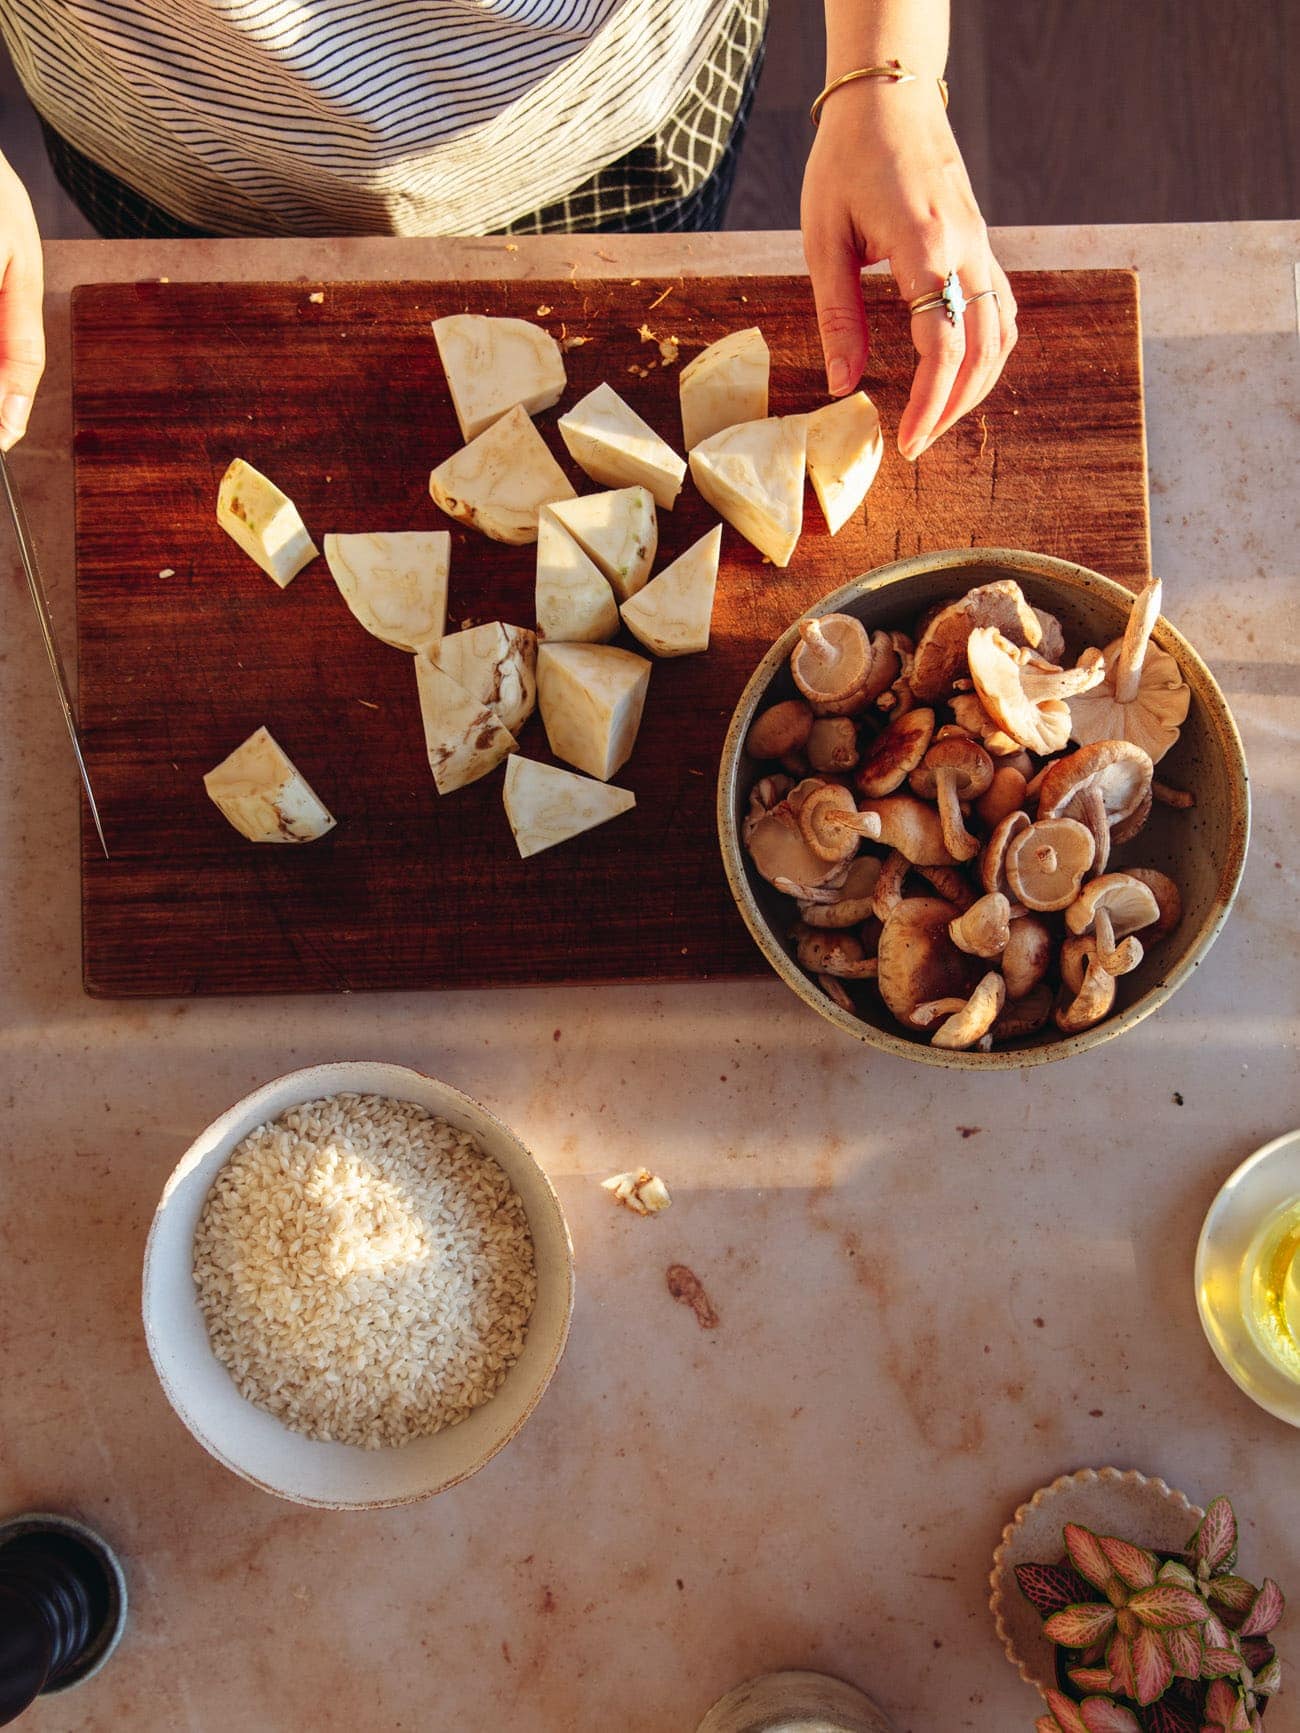 Celeriac Risotto with Roasted Mushrooms by Izy Hossack